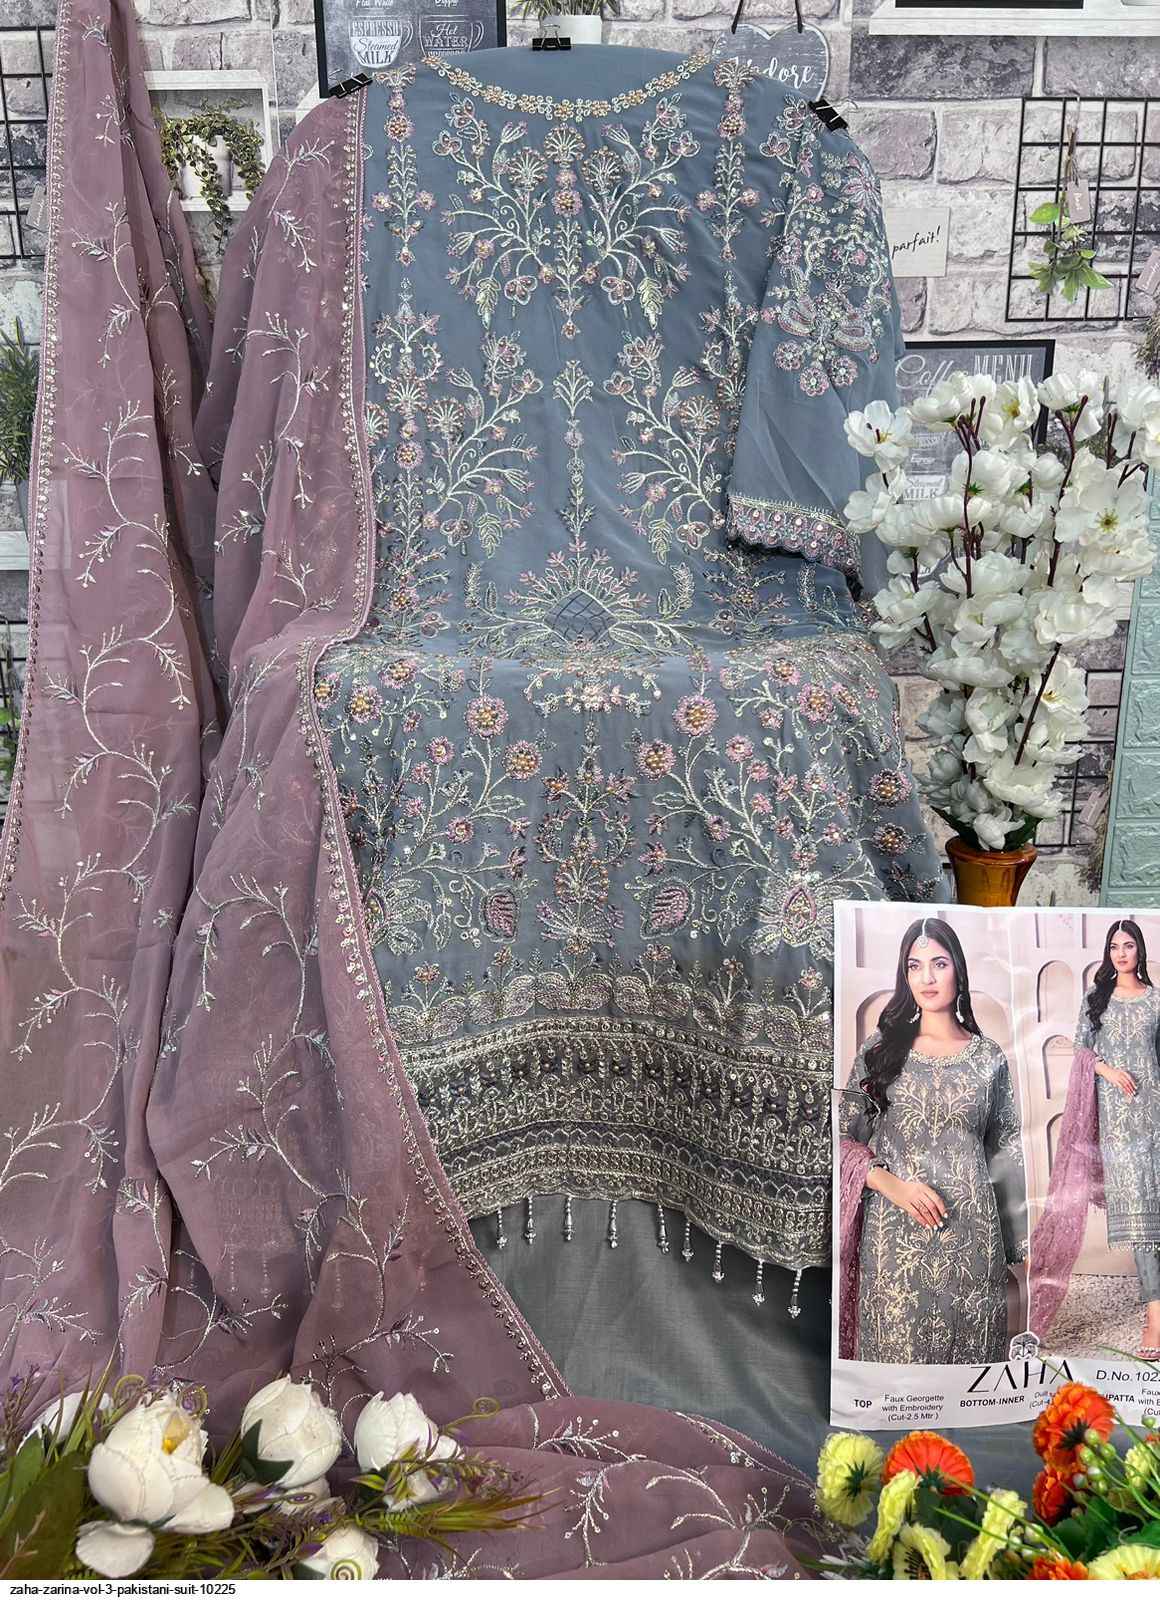 Zaha Zarina Vol 3 Georgette Dress Material 3 pcs Catalogue